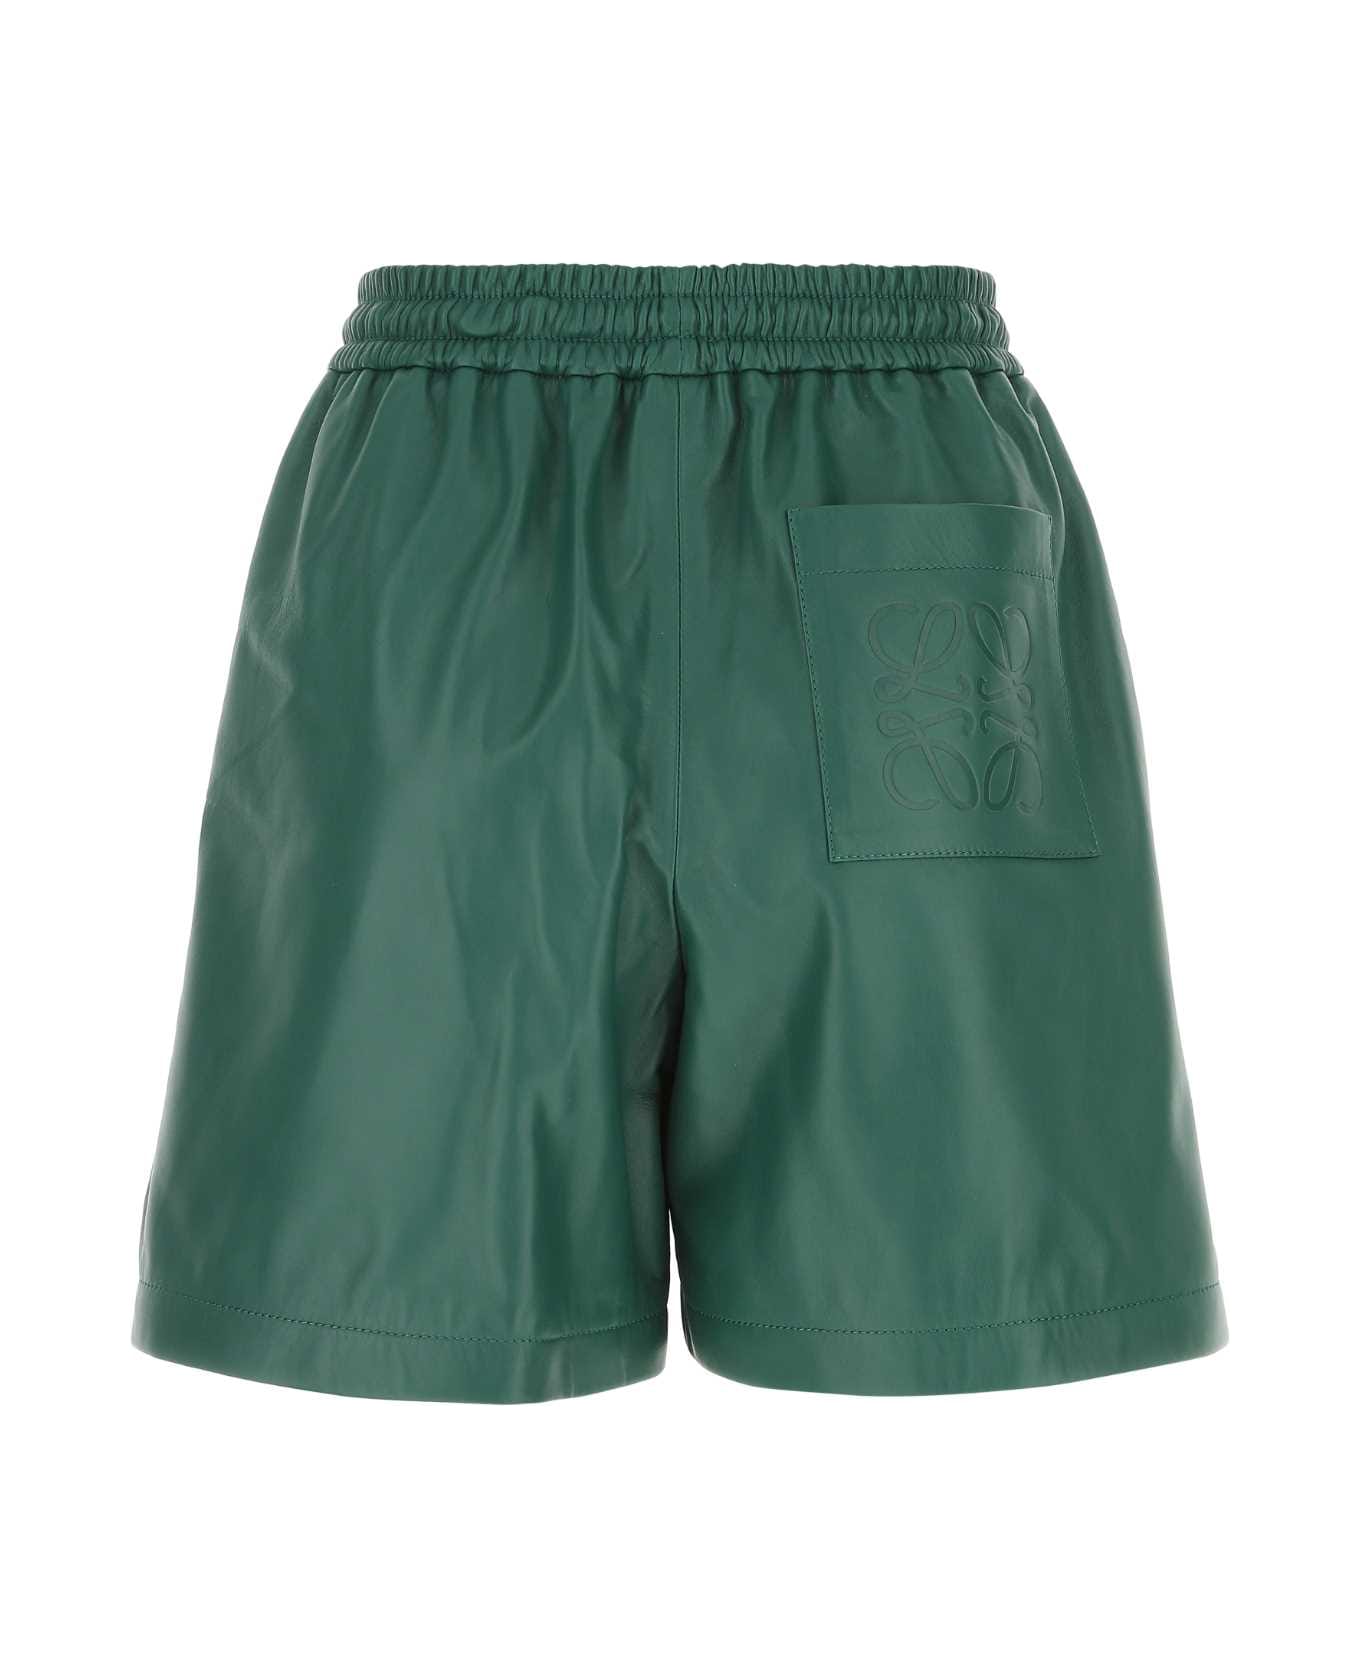 Loewe Bottle Green Nappa Leather Shorts - BOTTLEGREEN